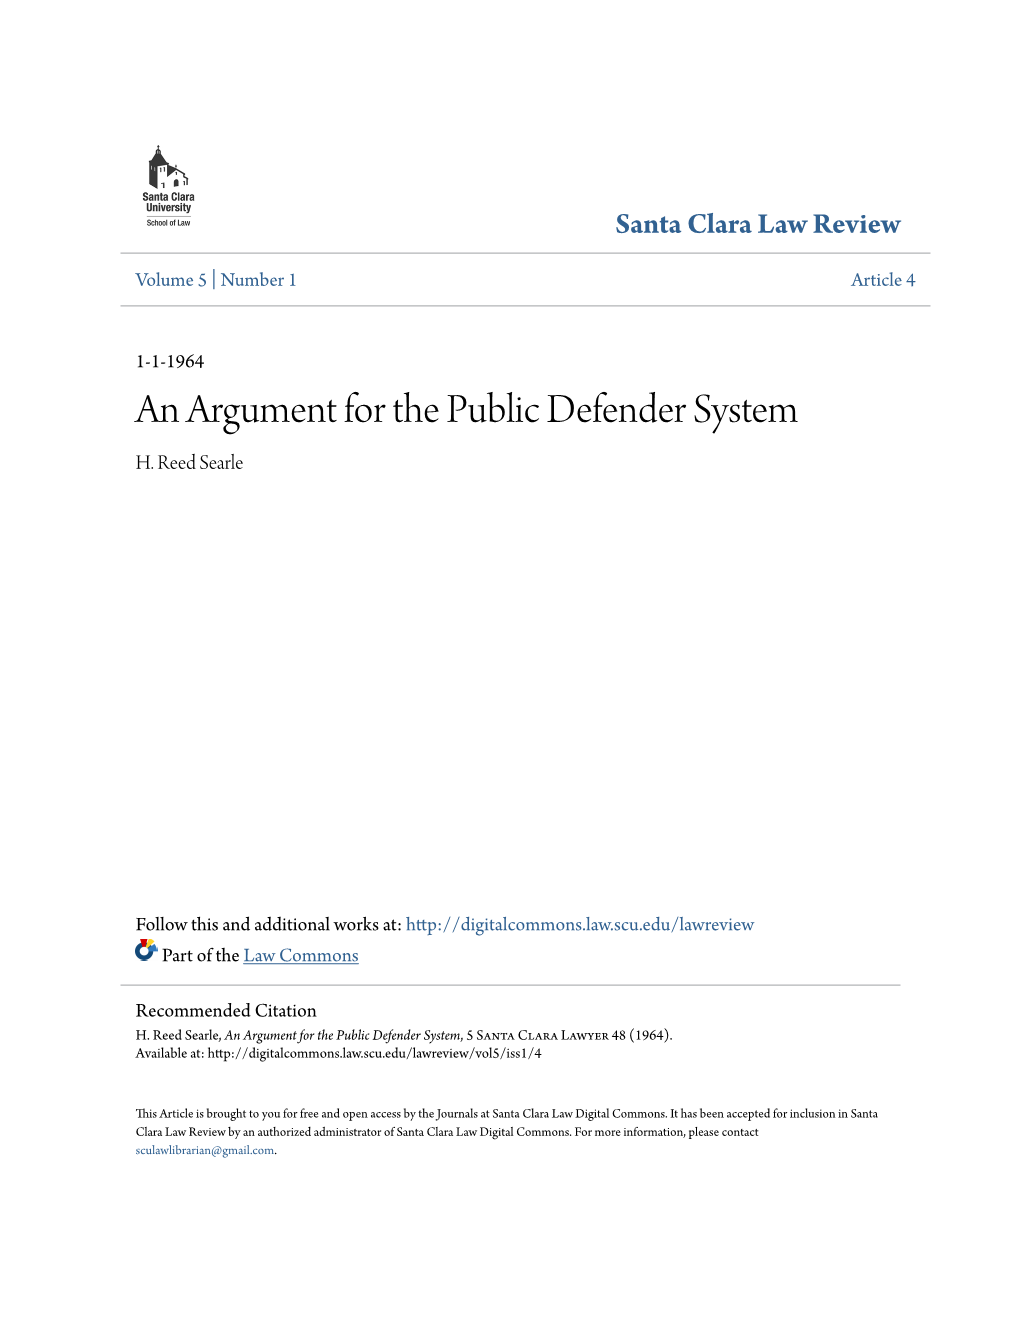 An Argument for the Public Defender System H